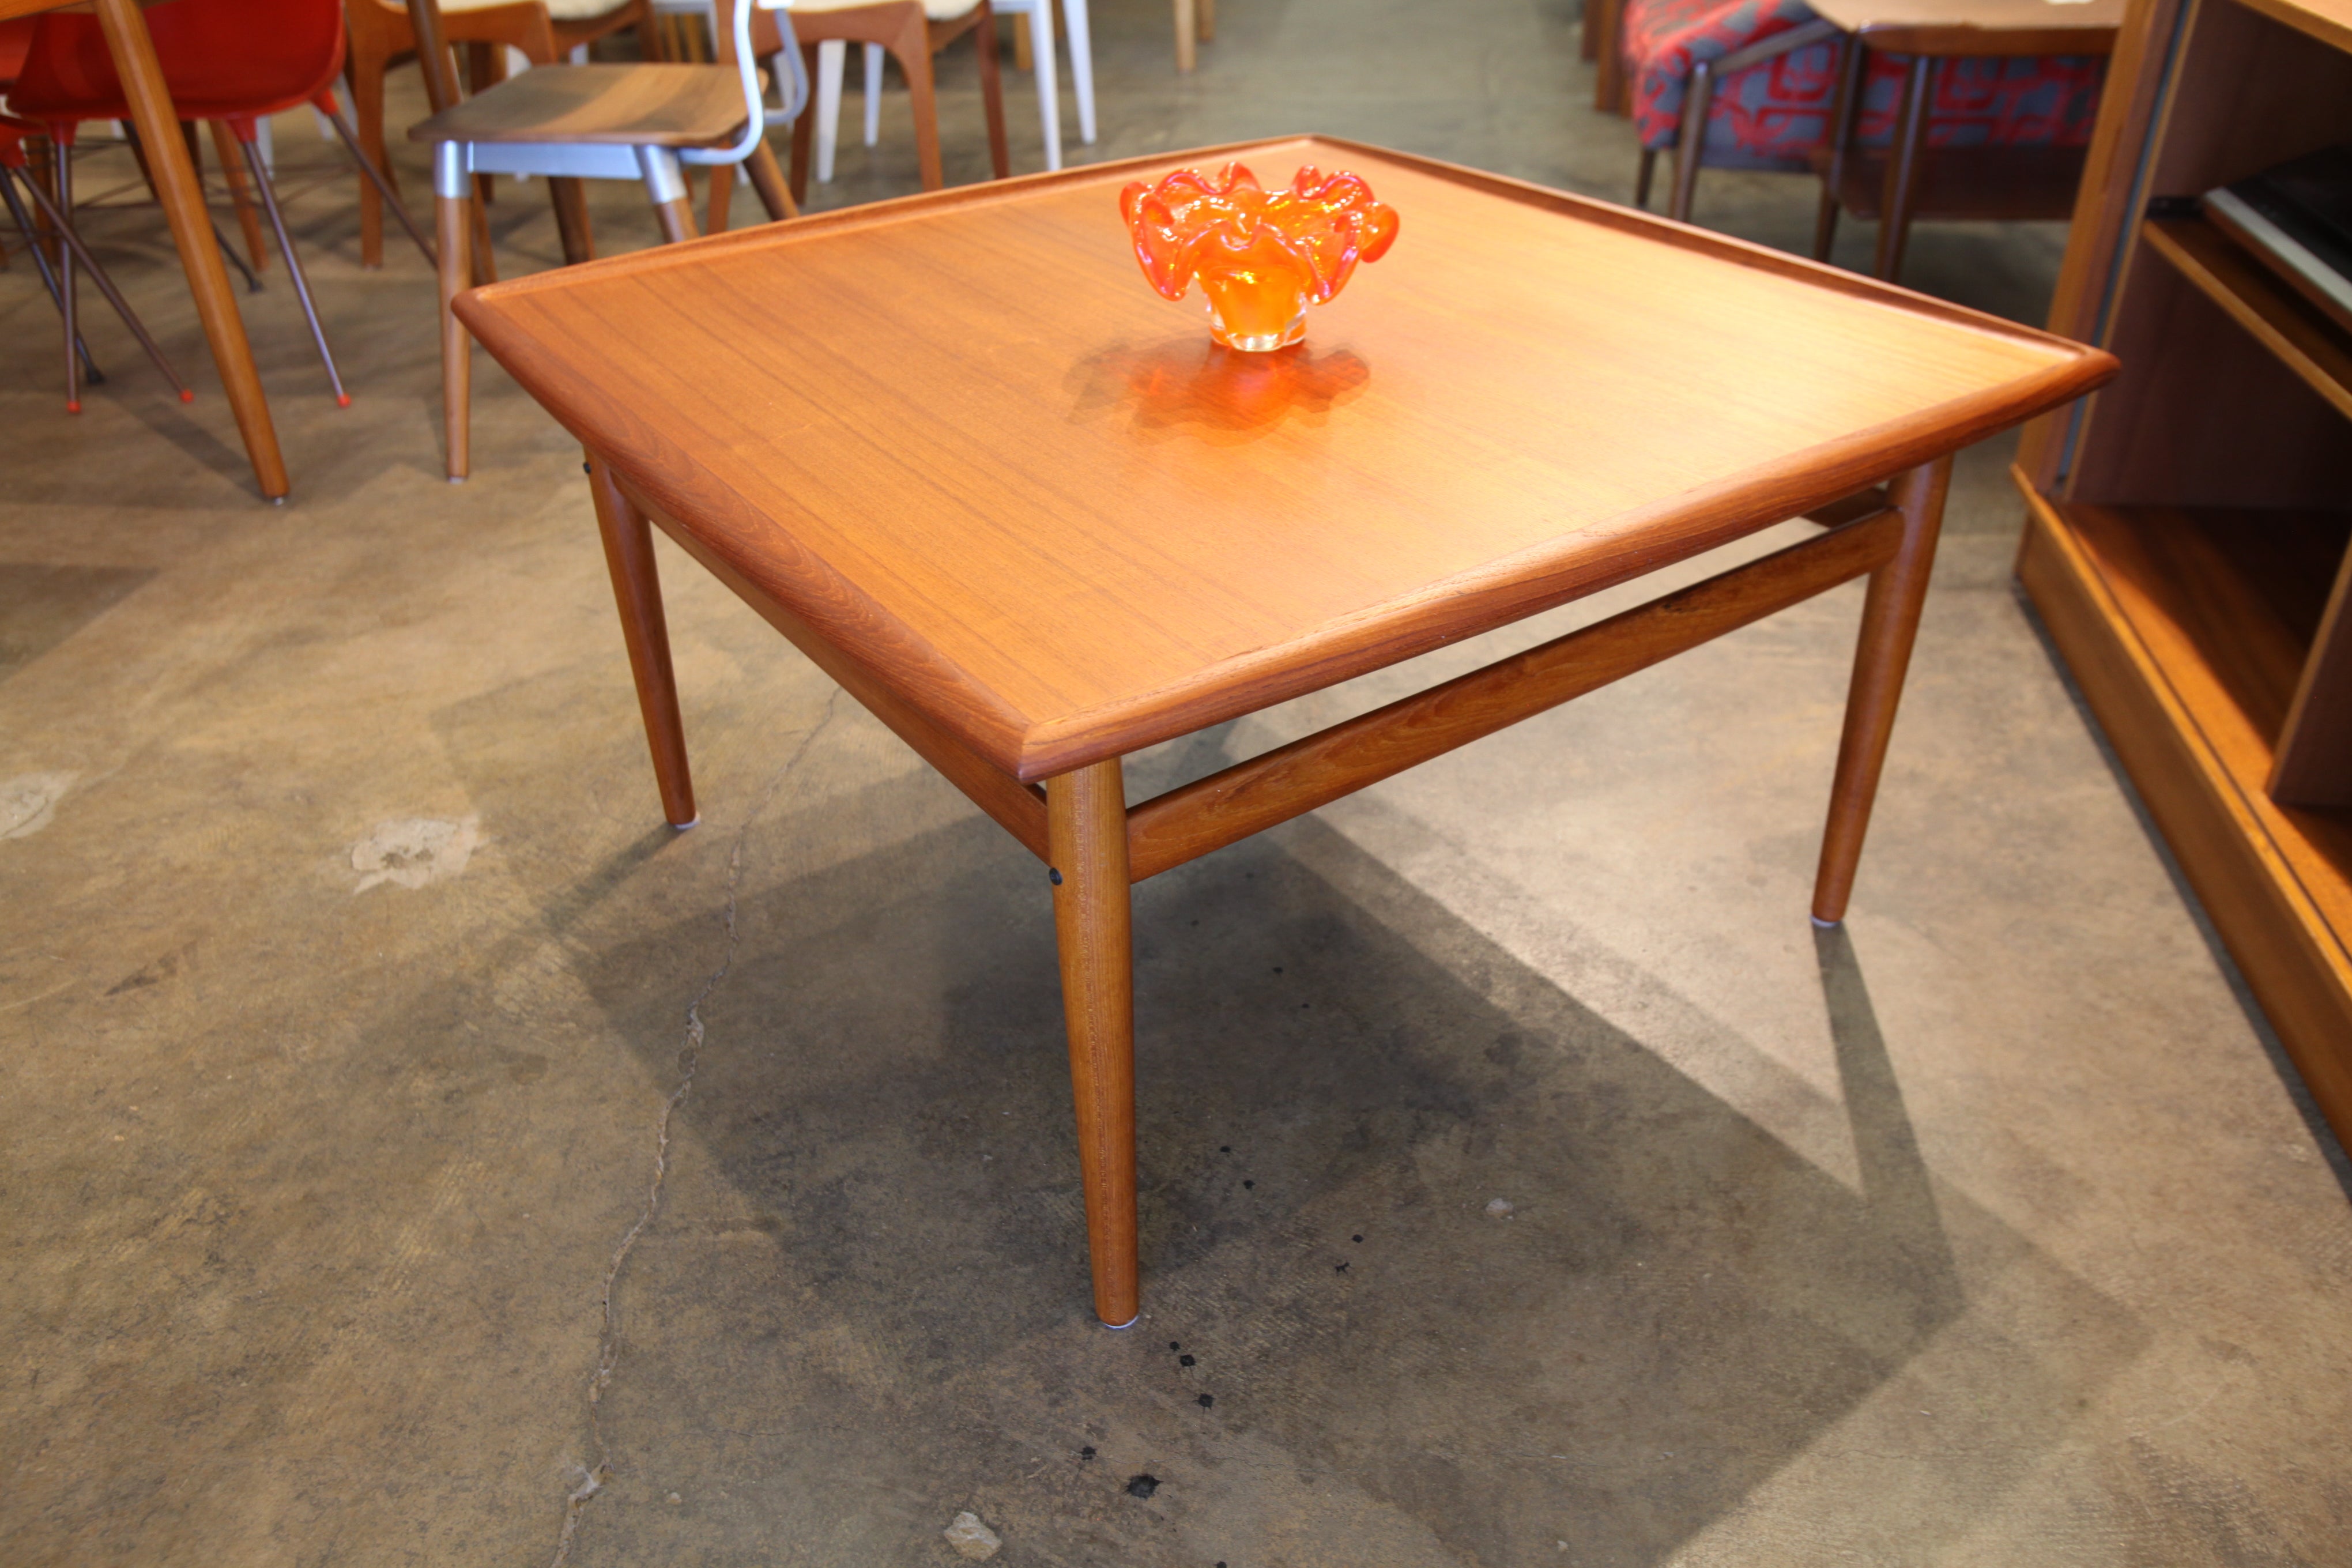 Beautiful Vintage Grete Jalk / Glostrup Square Teak Coffee Table (37.25" x 37.25" x 20.25"H)